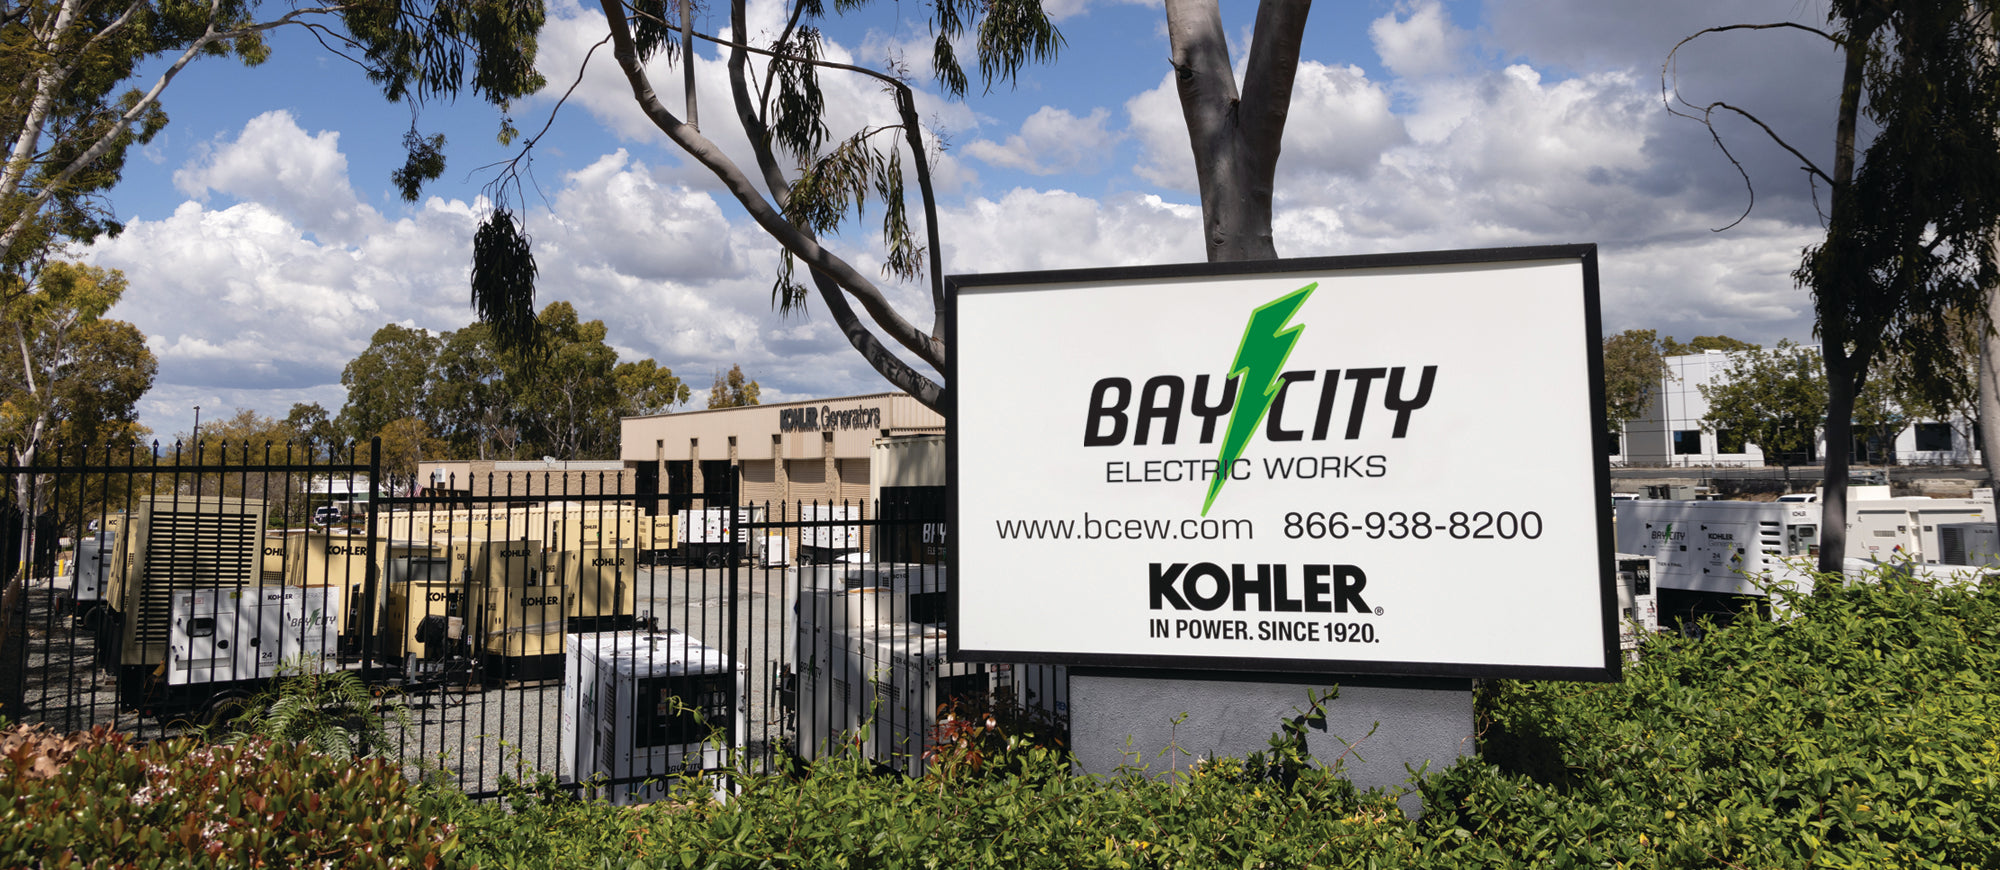 Bay City Electric Works Corporate Office - California, Nevada, Hawaii